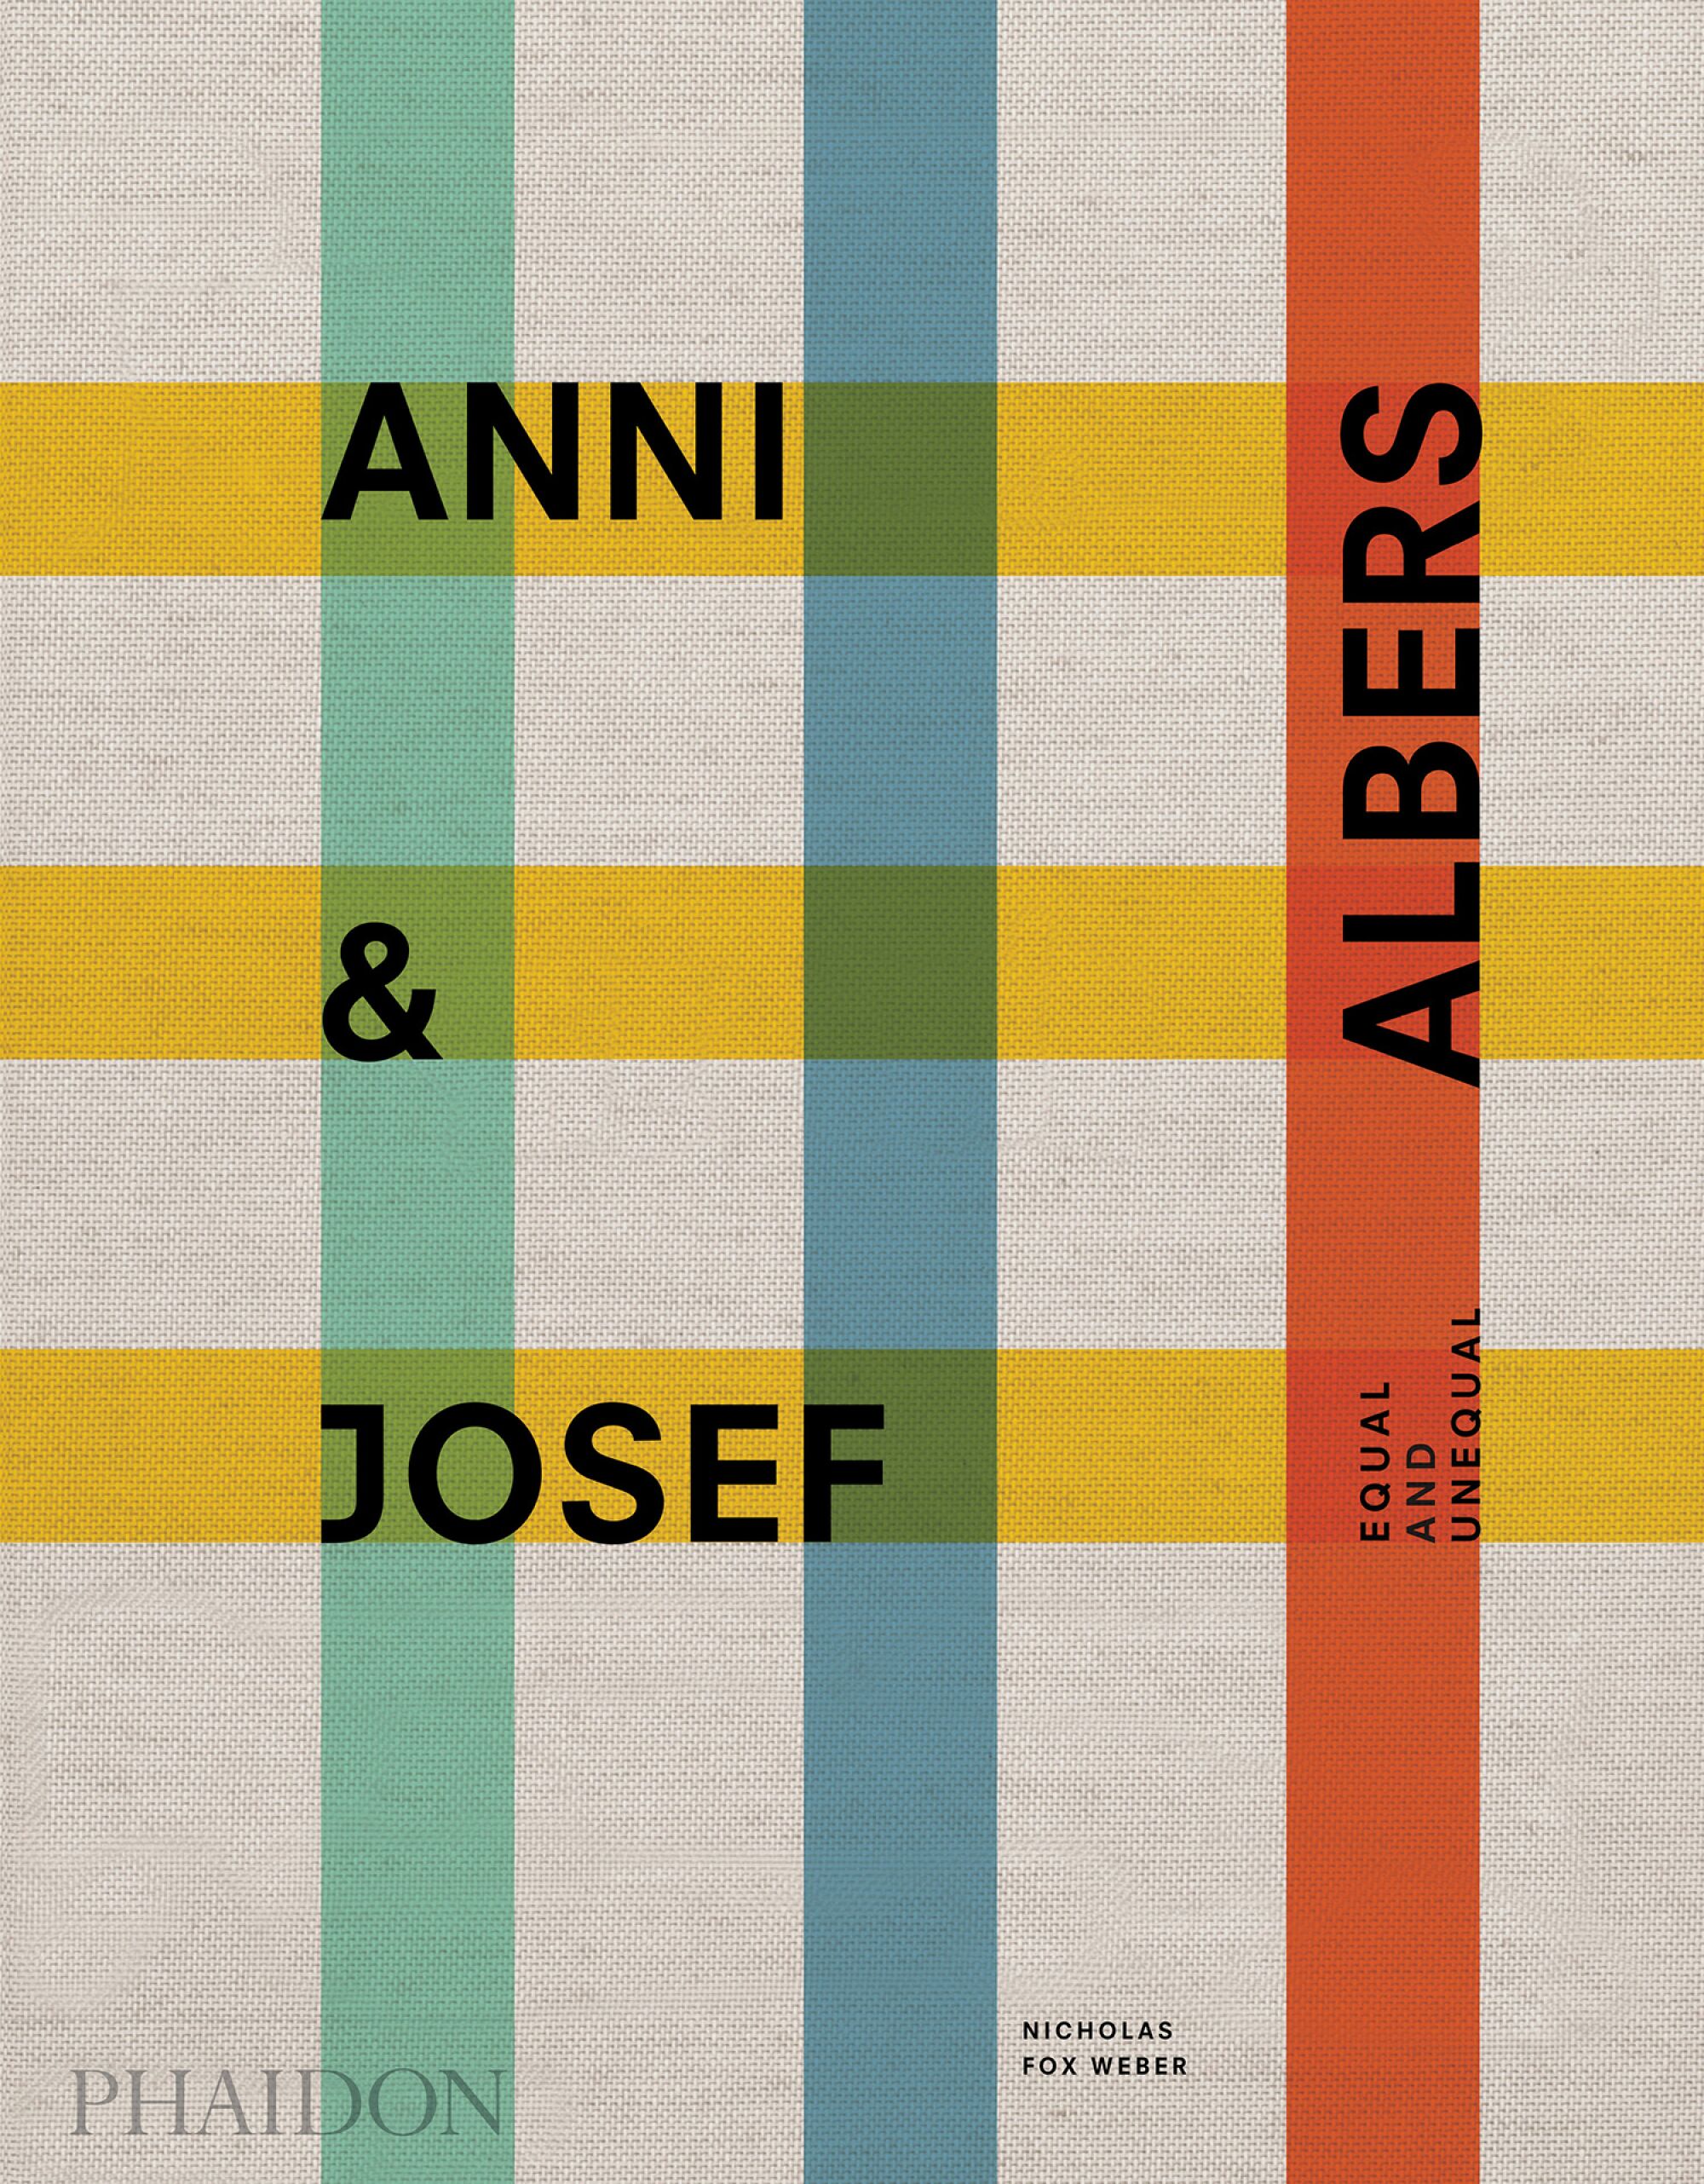 Nicholas Fox Weber, "Anni & Josef Albers: Equal and Unequal"